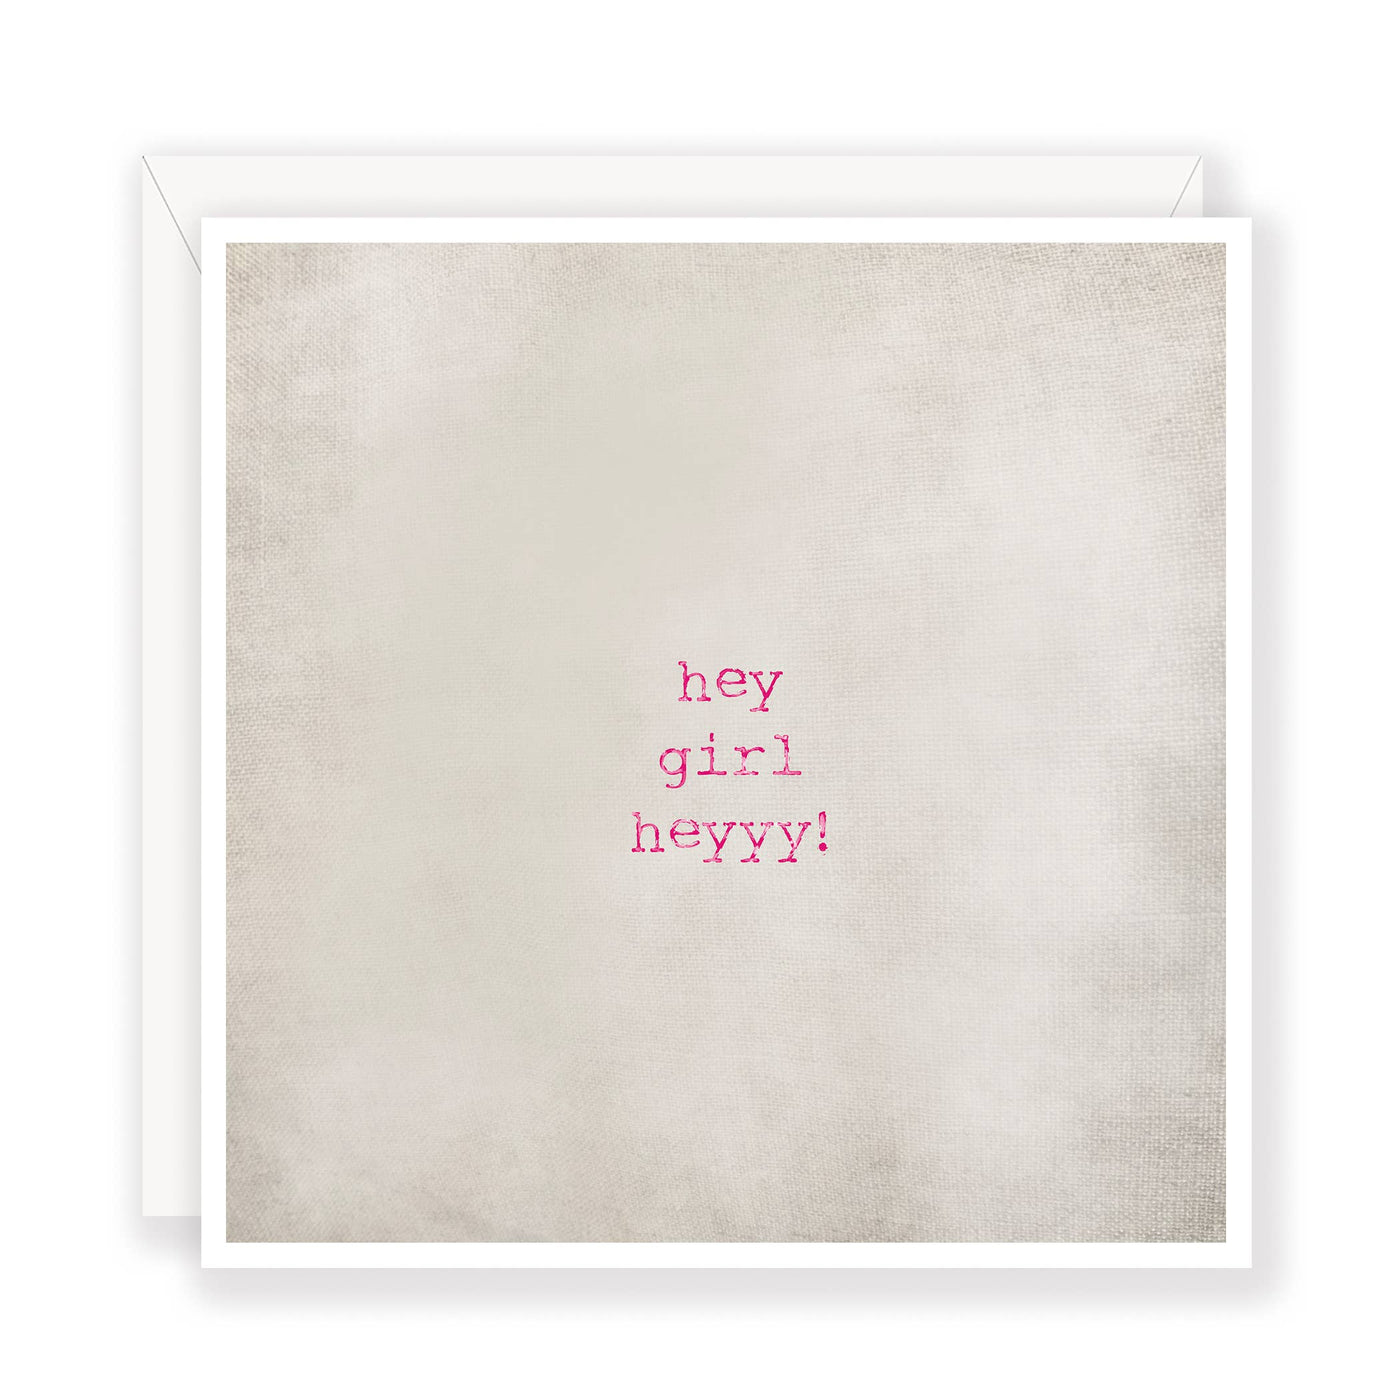 'Hey Girl Heyyy' greeting card